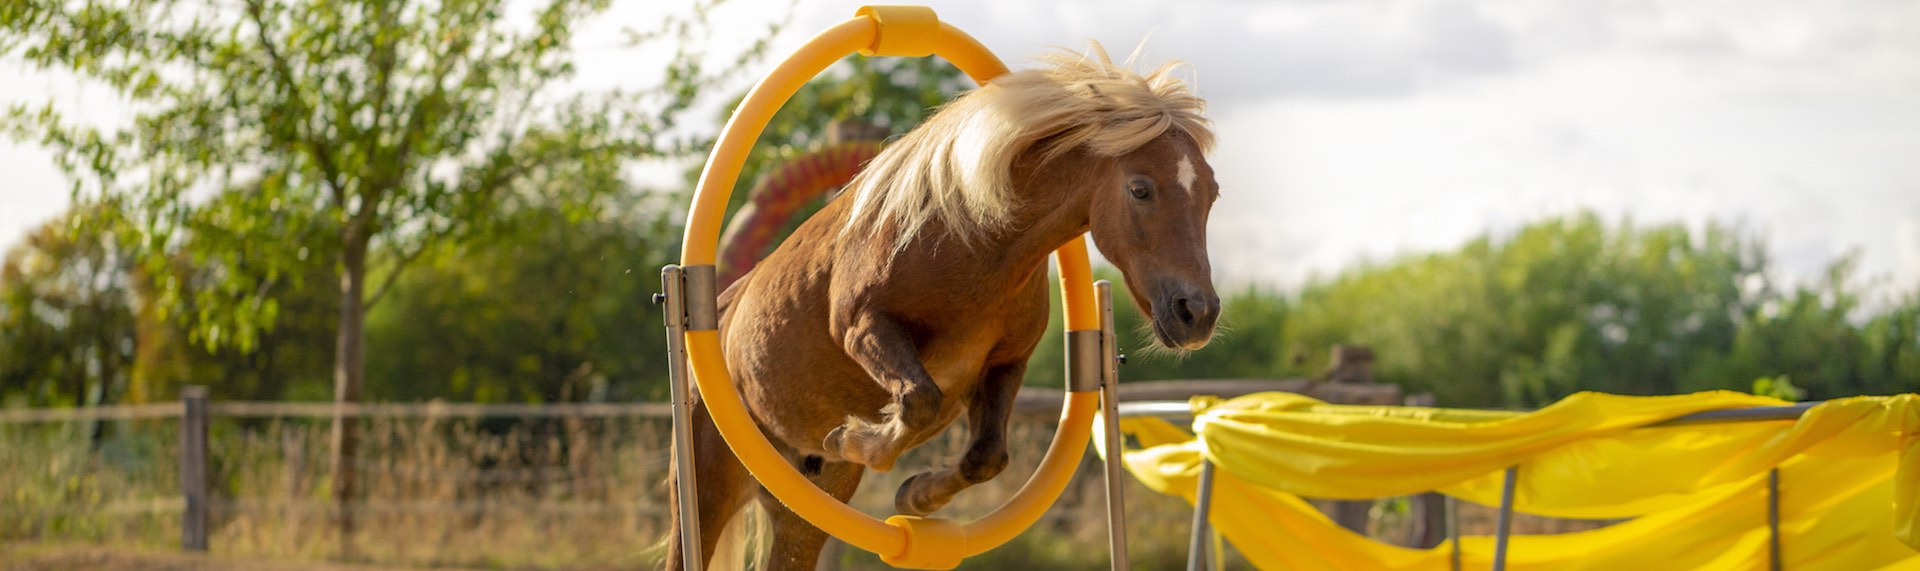 the hoop for horse agility